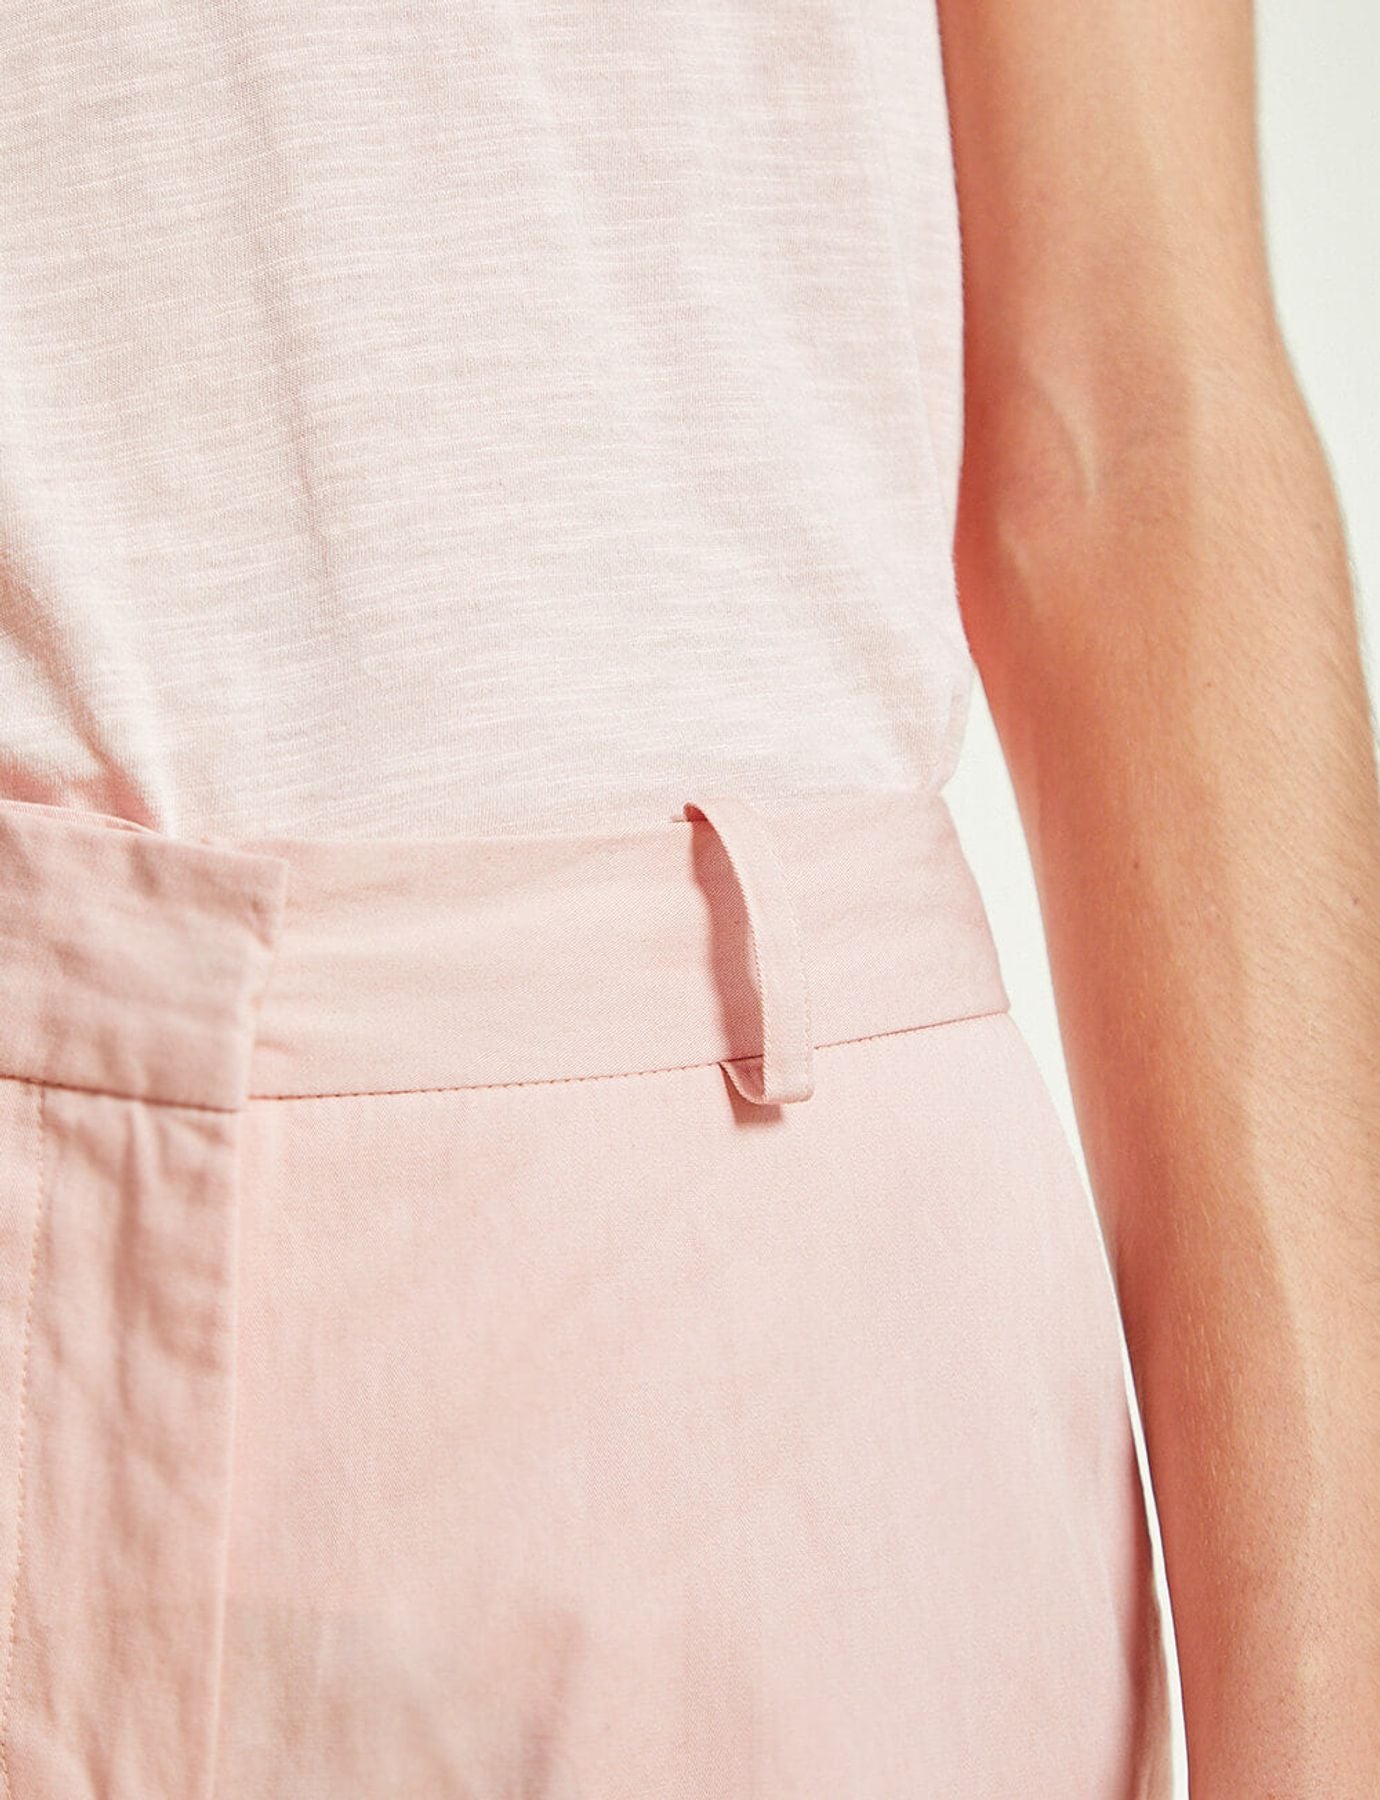 pantaloni-anatole-rosa-chiaro